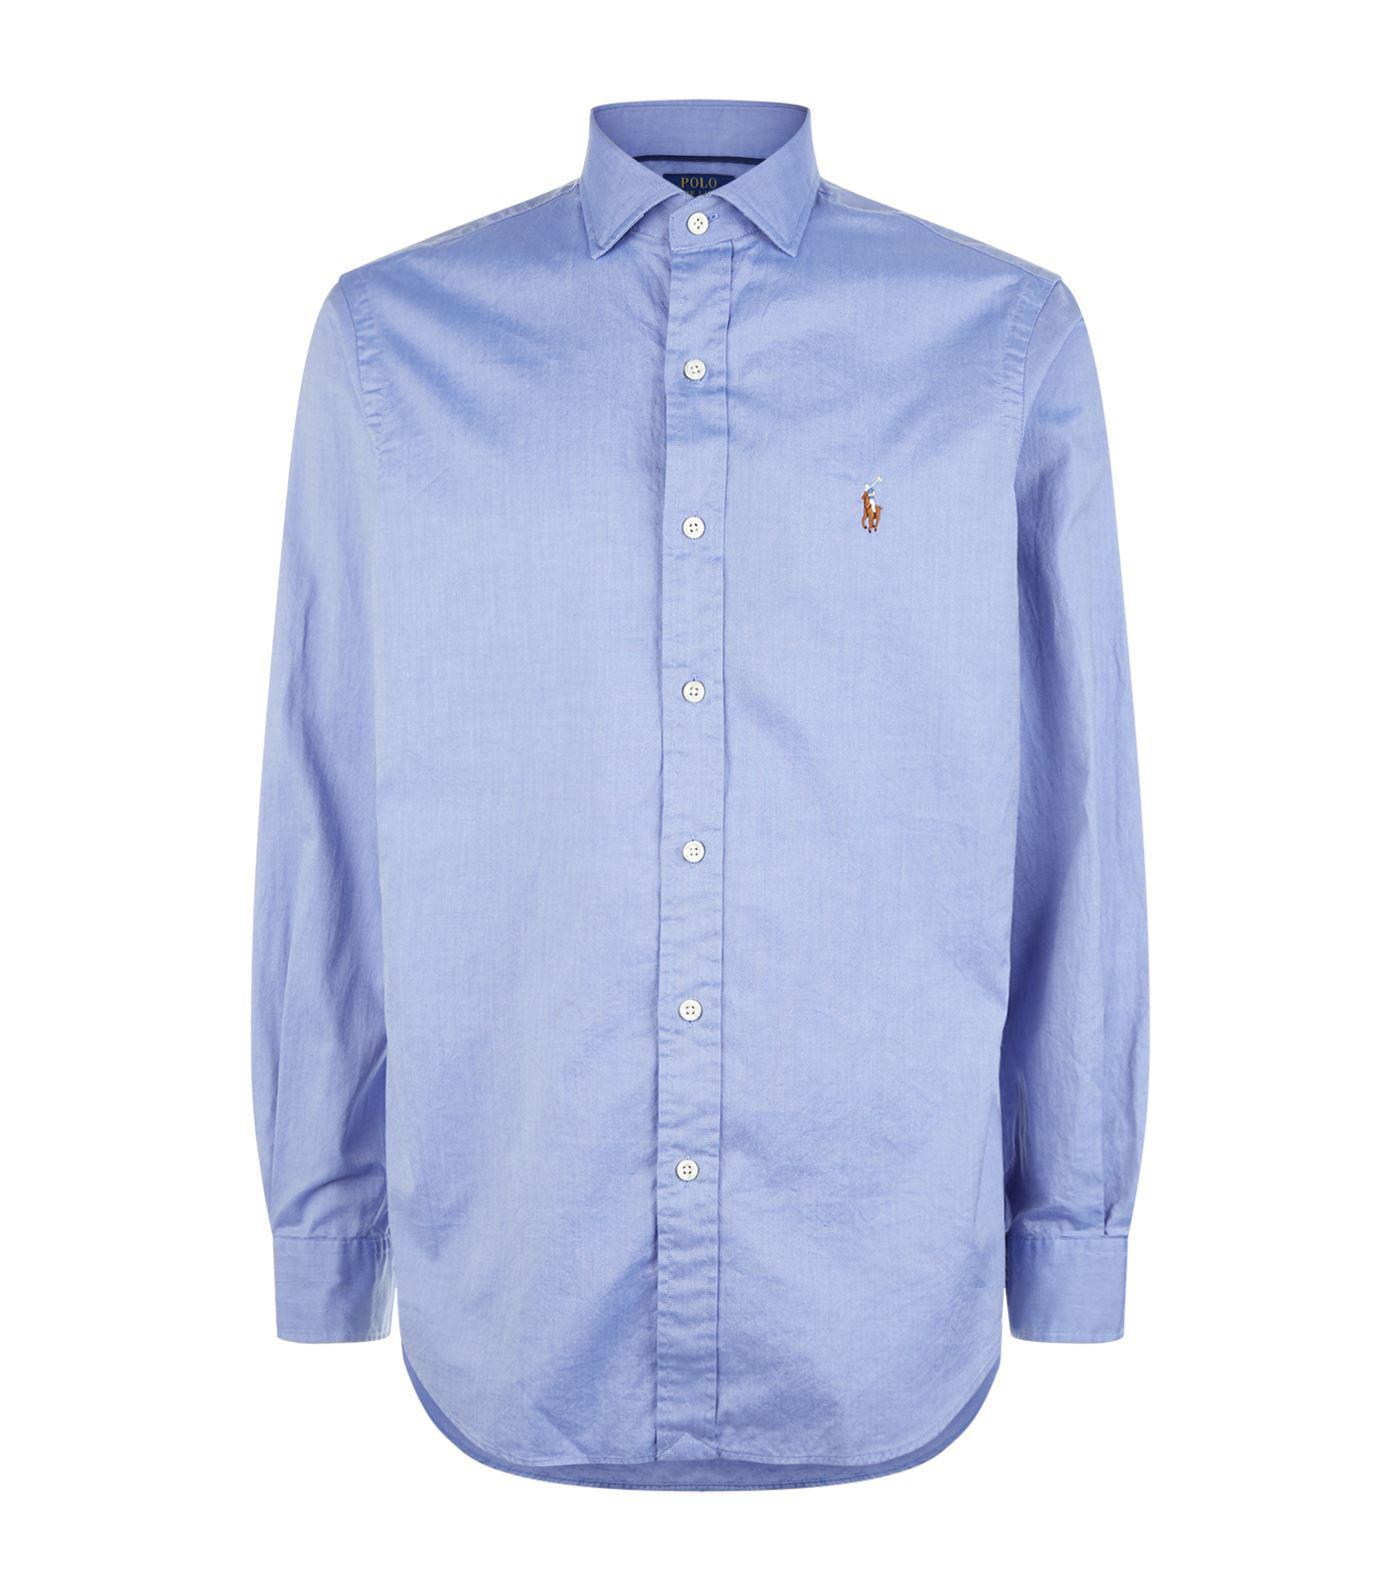 Polo Ralph Lauren Cotton Slim-fit Luxury Oxford Shirt in Blue for Men - Lyst